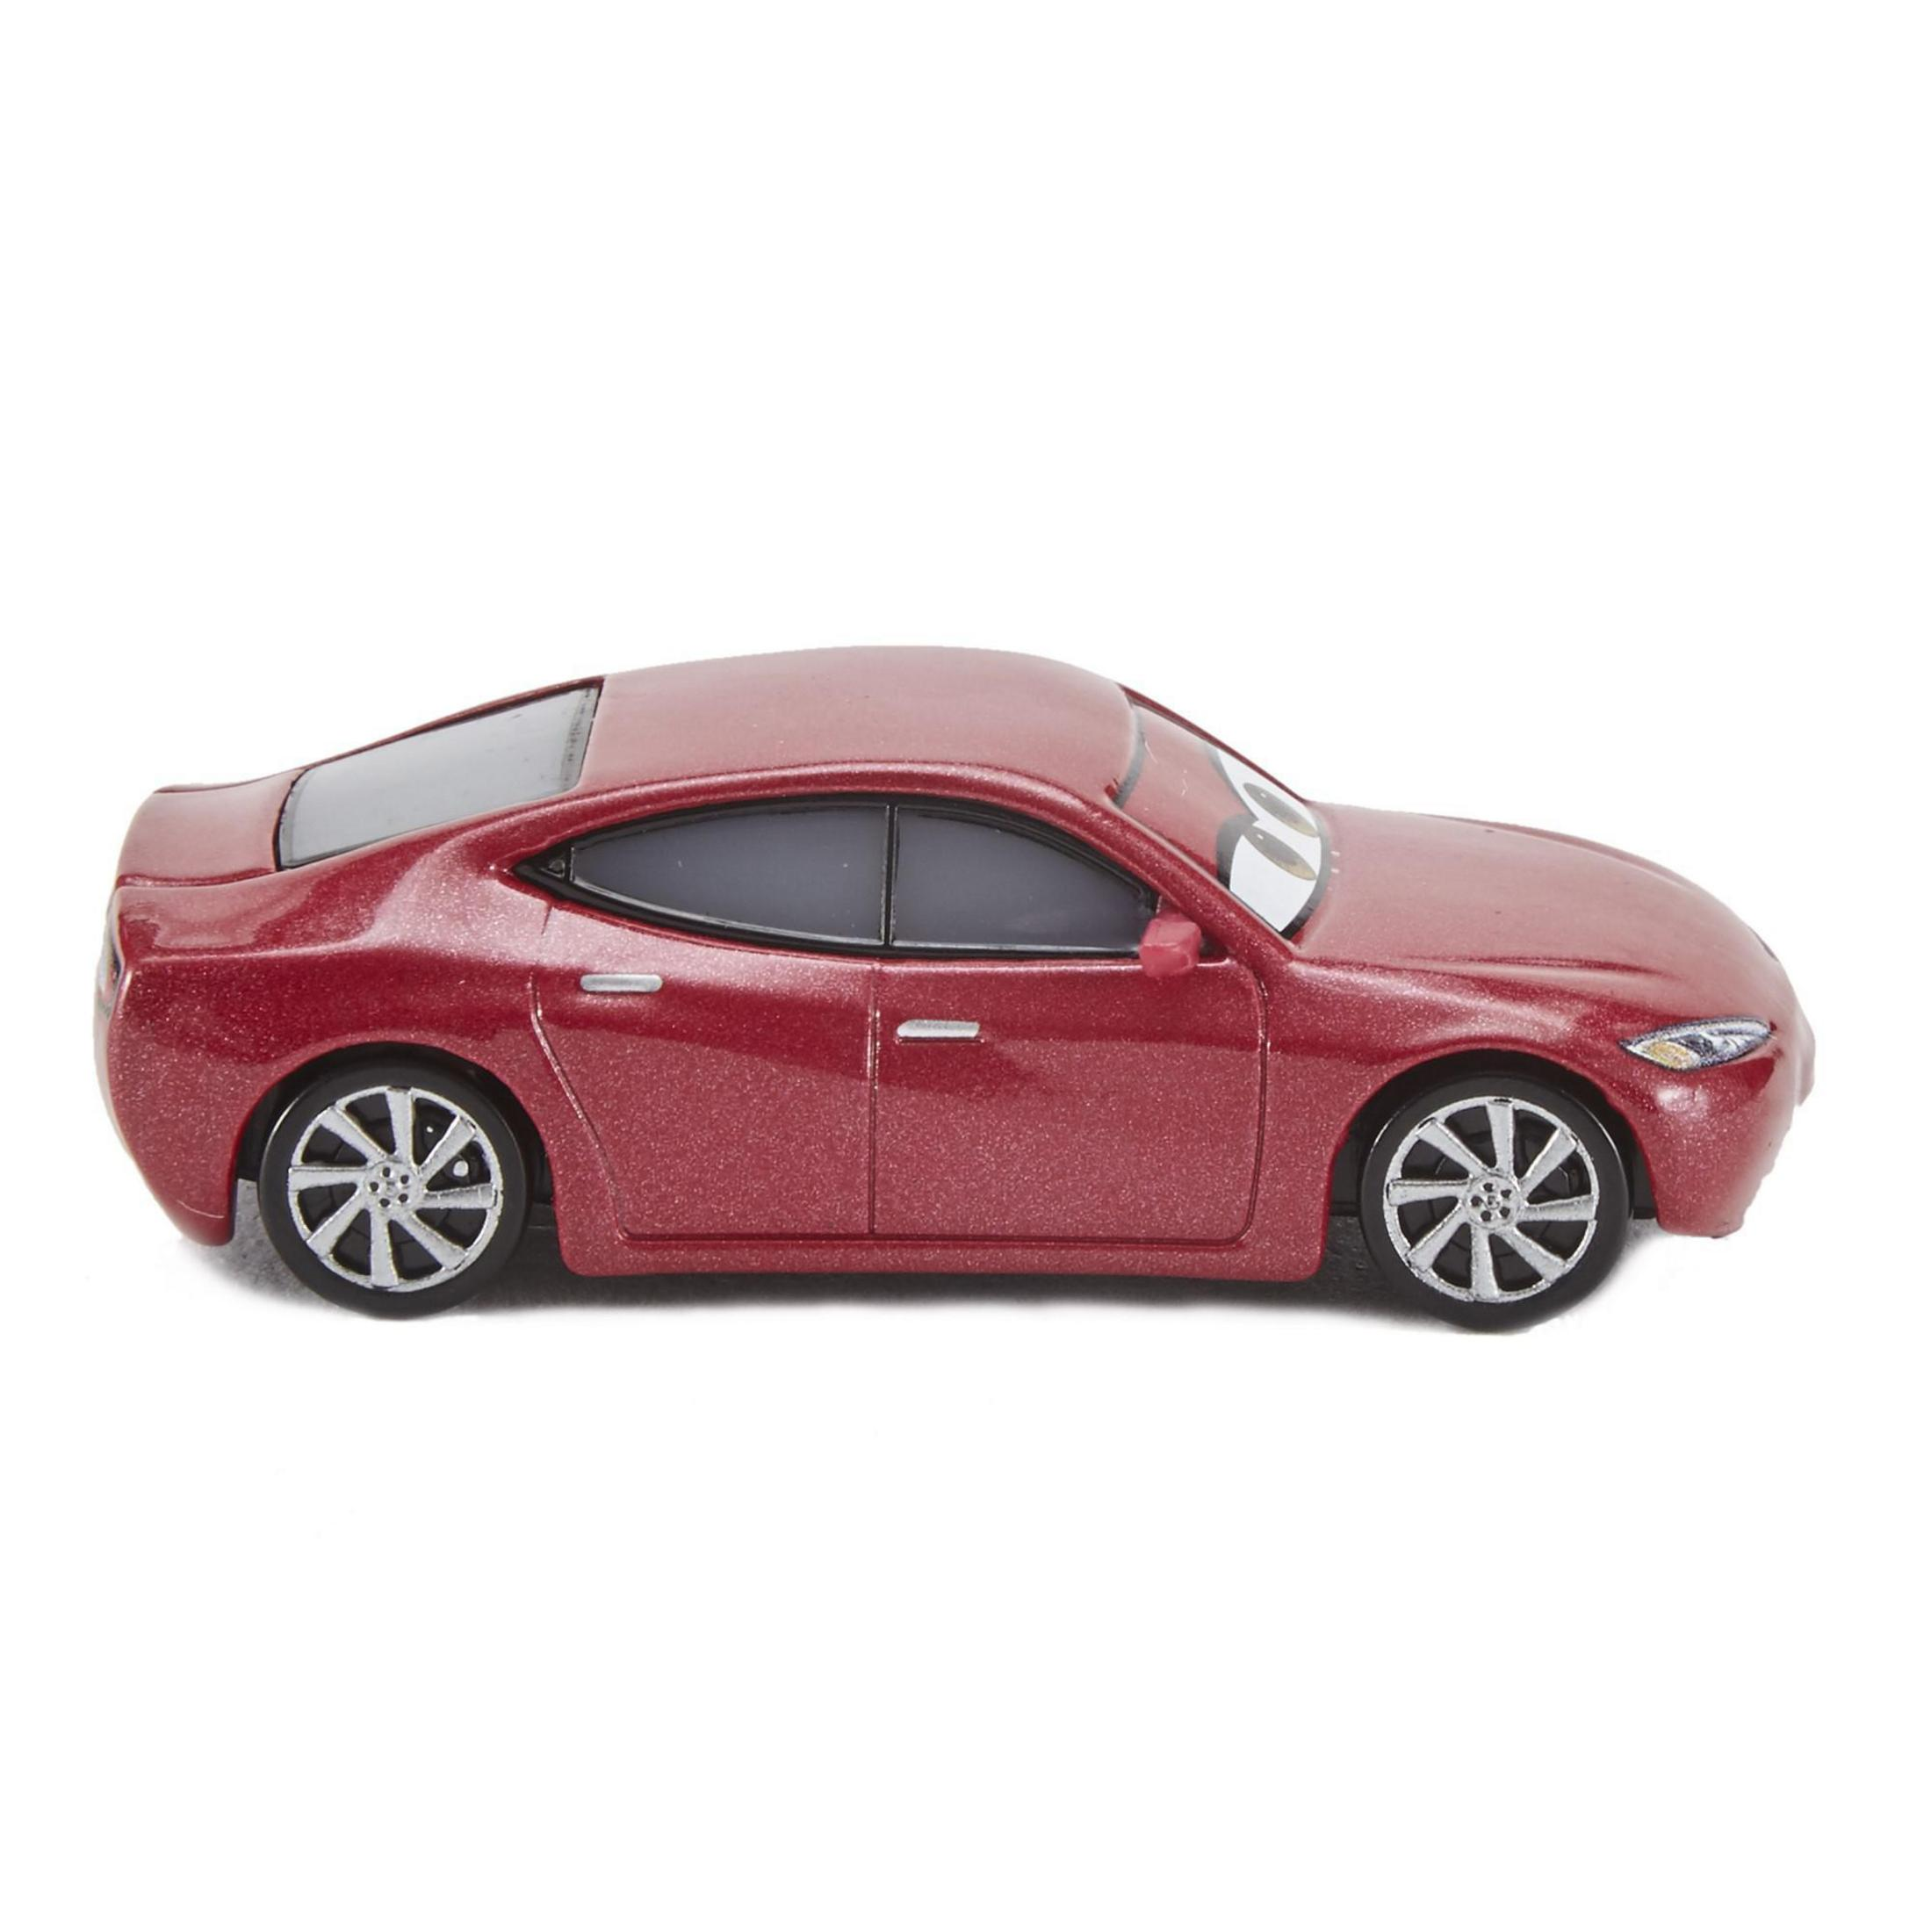 GBY15 SORT Mehrfarbig CARS FAHRZEUG CHARACTER DIE-CAST Spielzeugauto